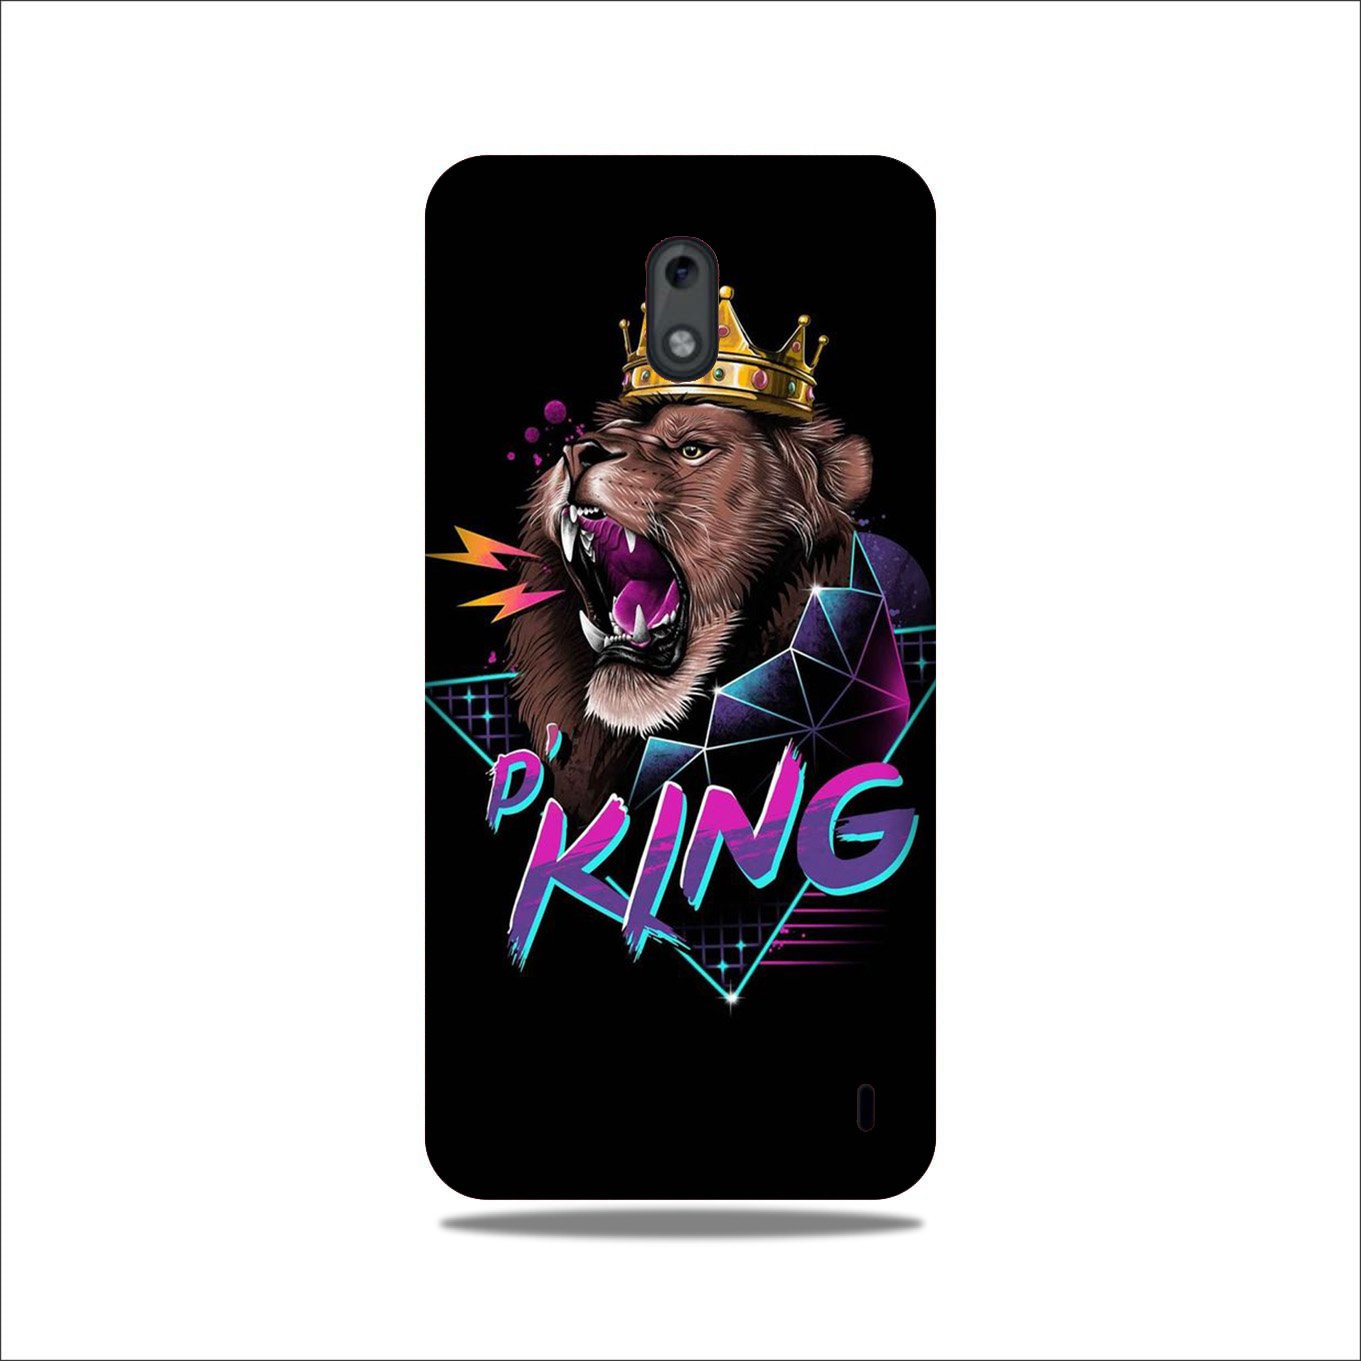 Lion King Case for Nokia 2.2 (Design No. 219)